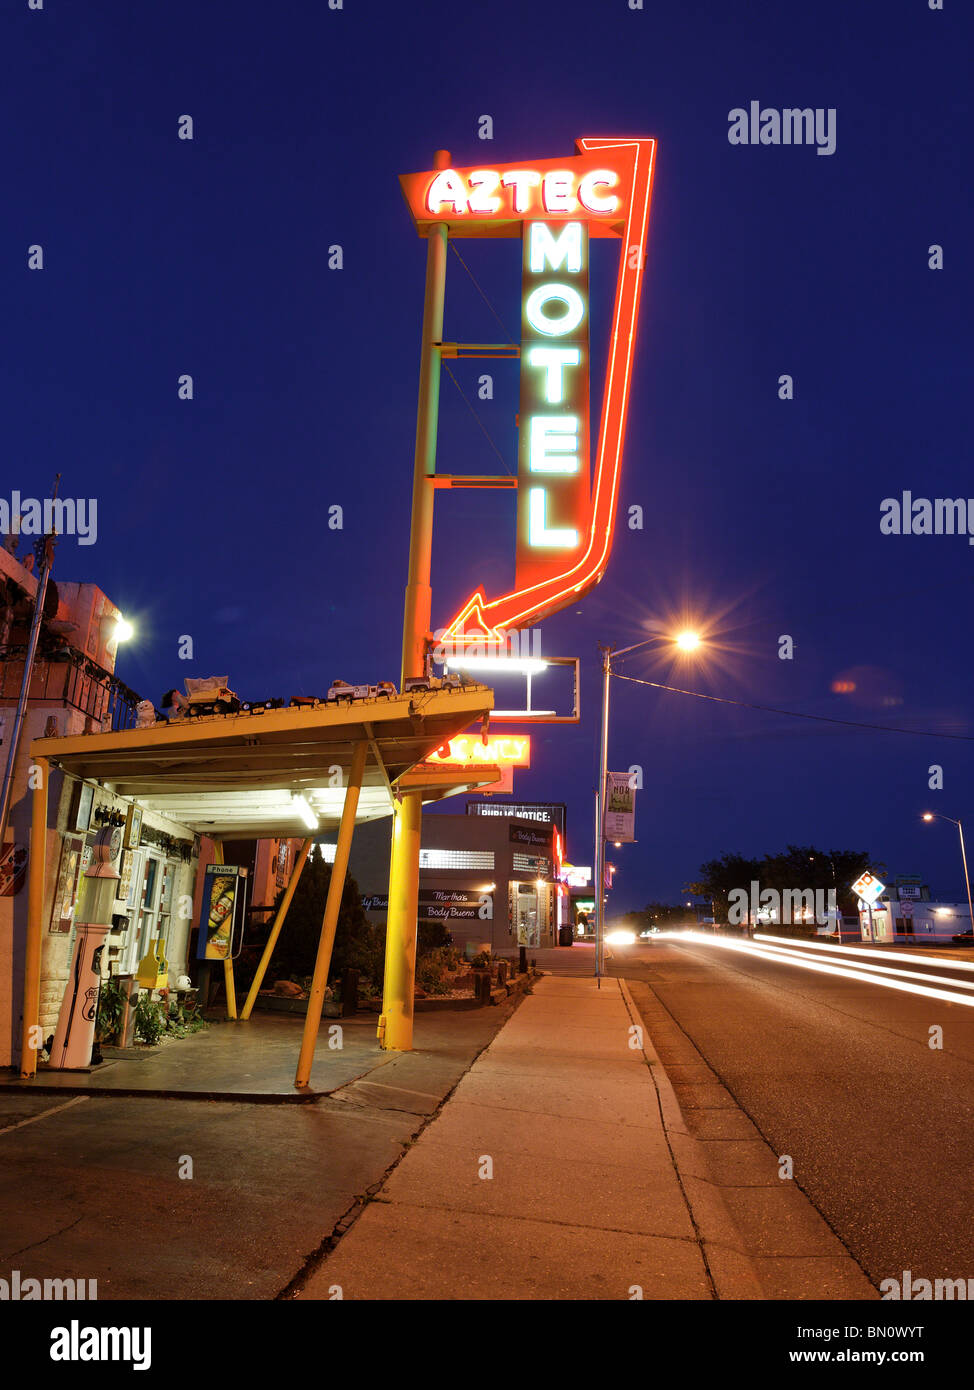 Neon Lights of the Aztec Motel, Rt 66, Albuquerque, New Mexico Stock Photo